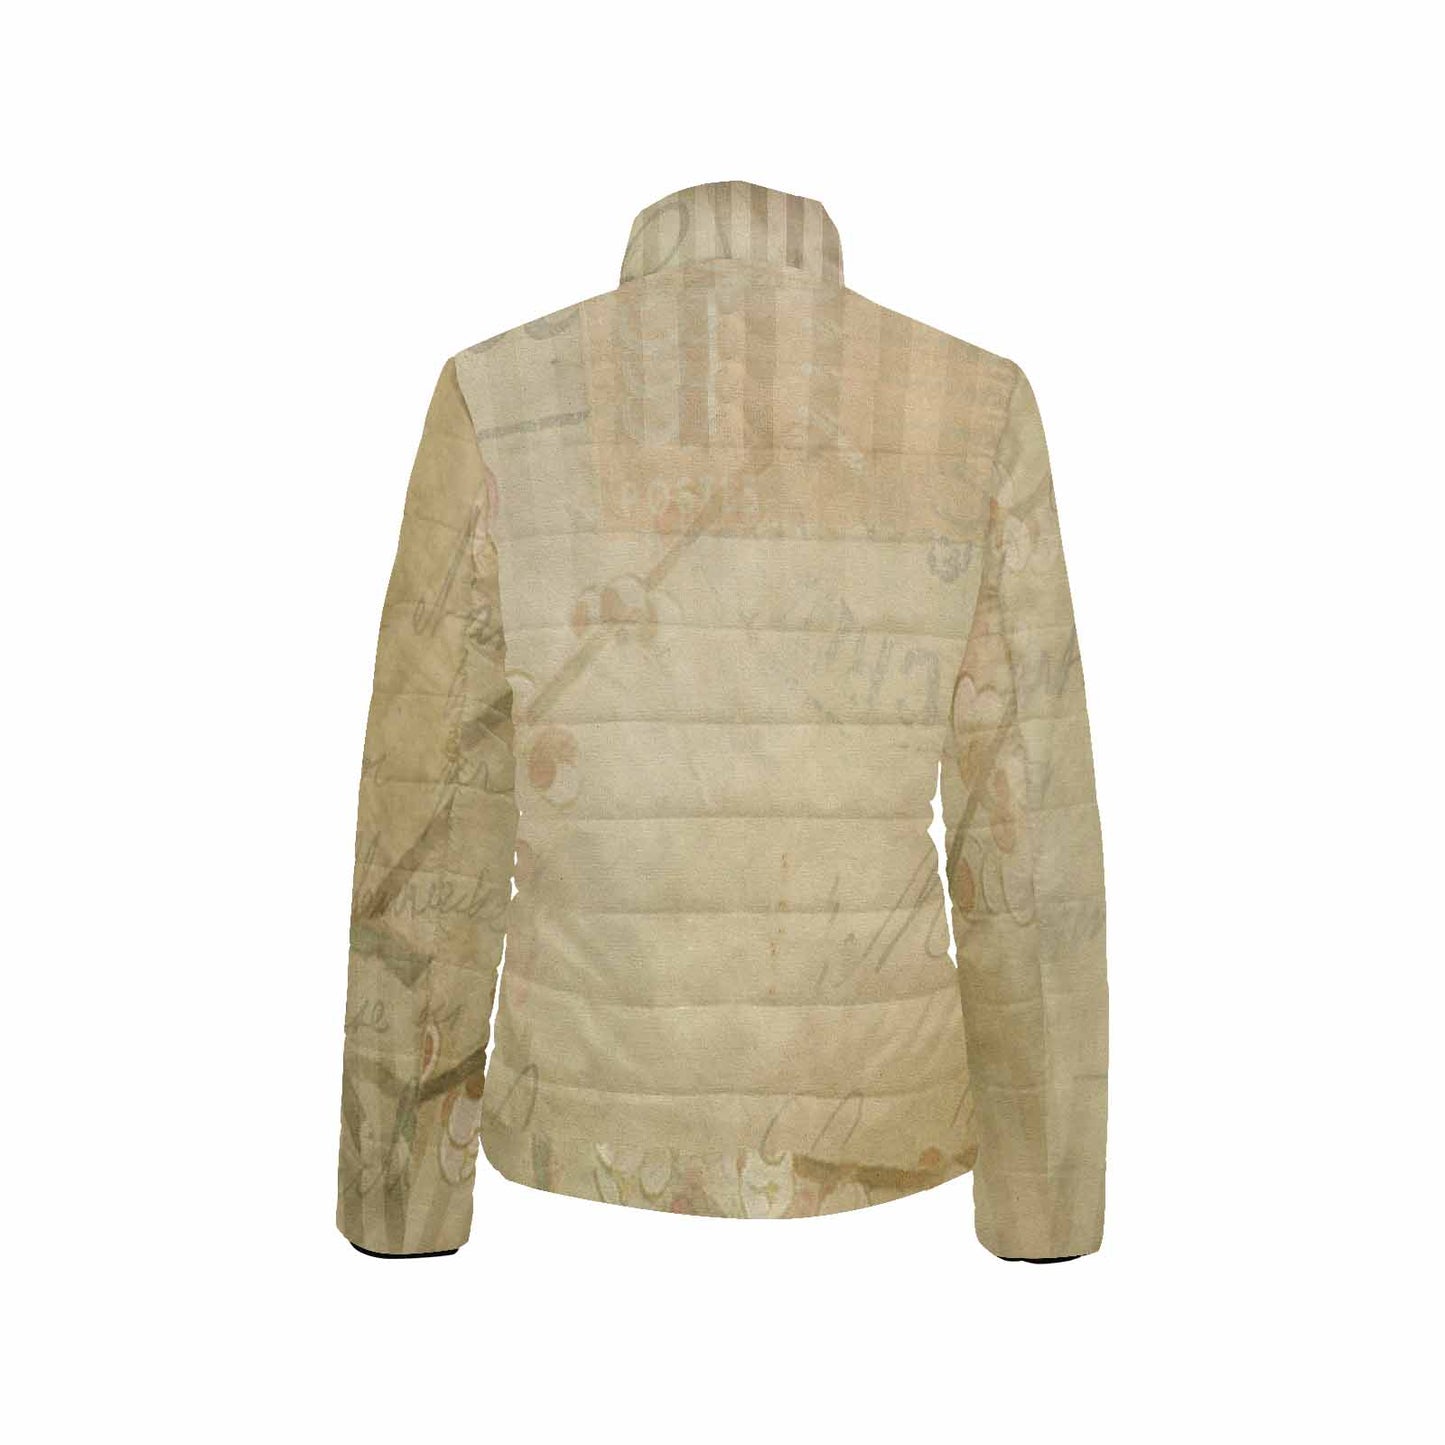 Antique general print quilted jacket, design 25